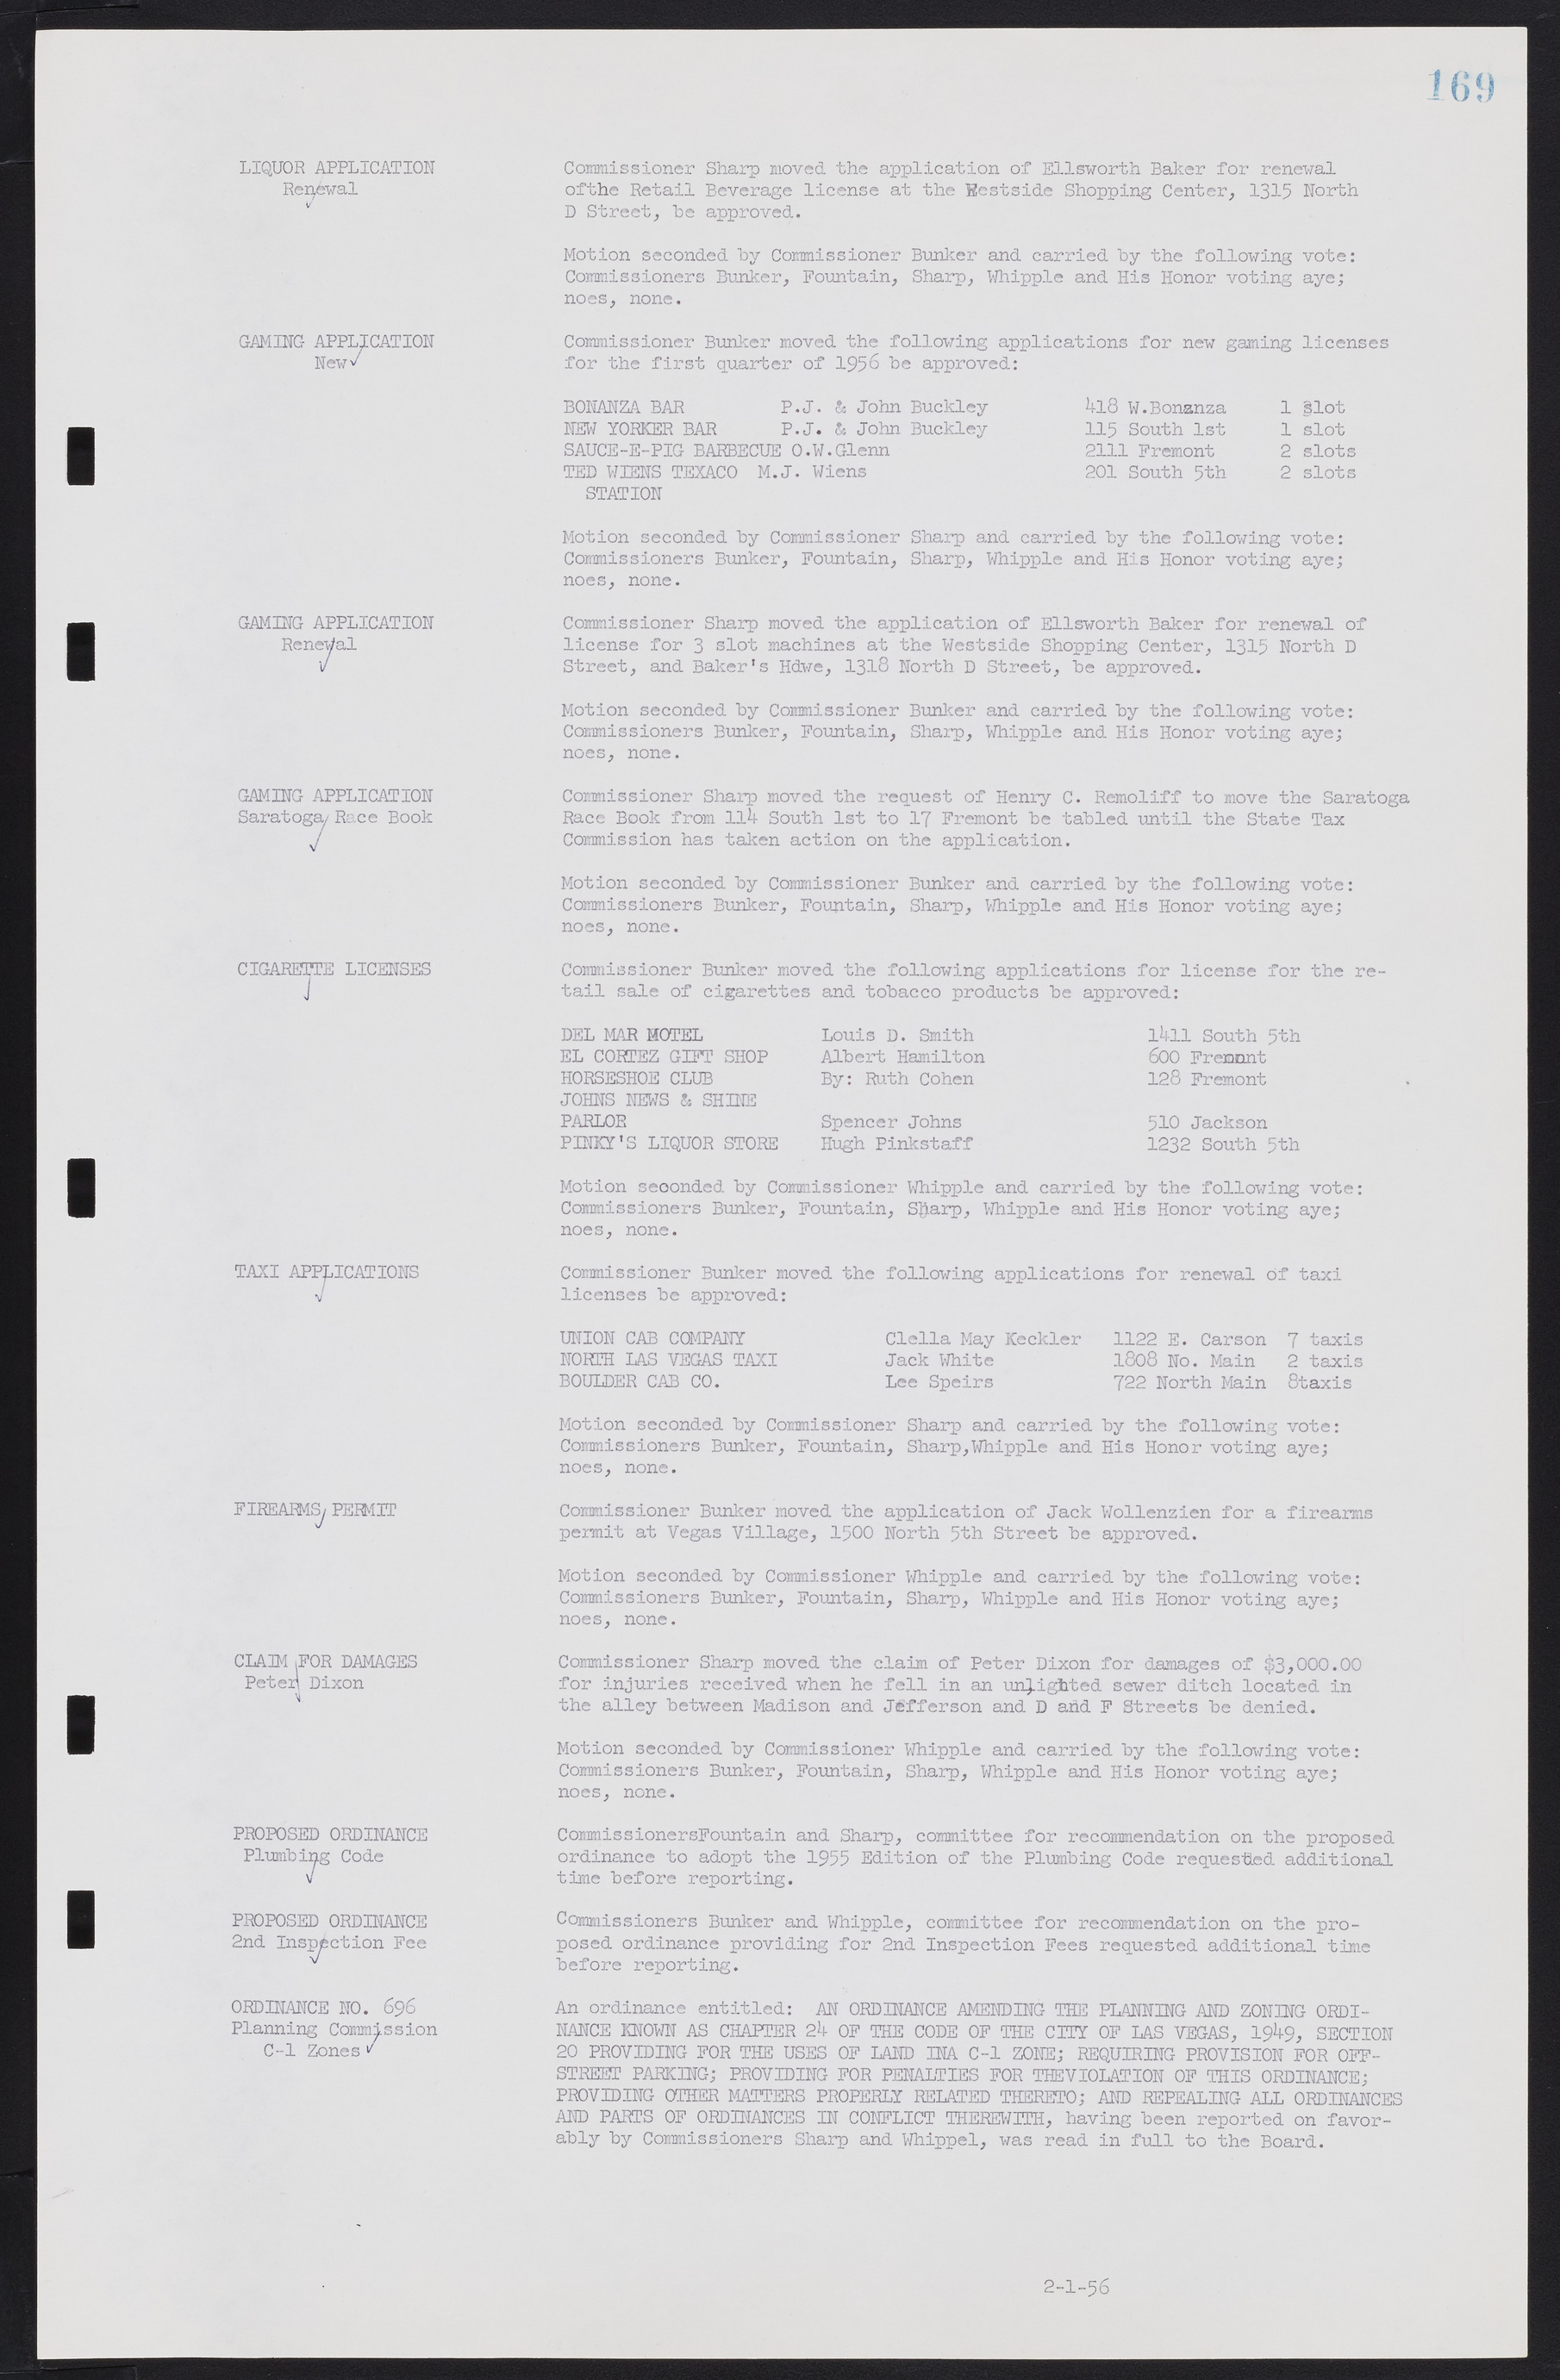 Las Vegas City Commission Minutes, September 21, 1955 to November 20, 1957, lvc000010-185